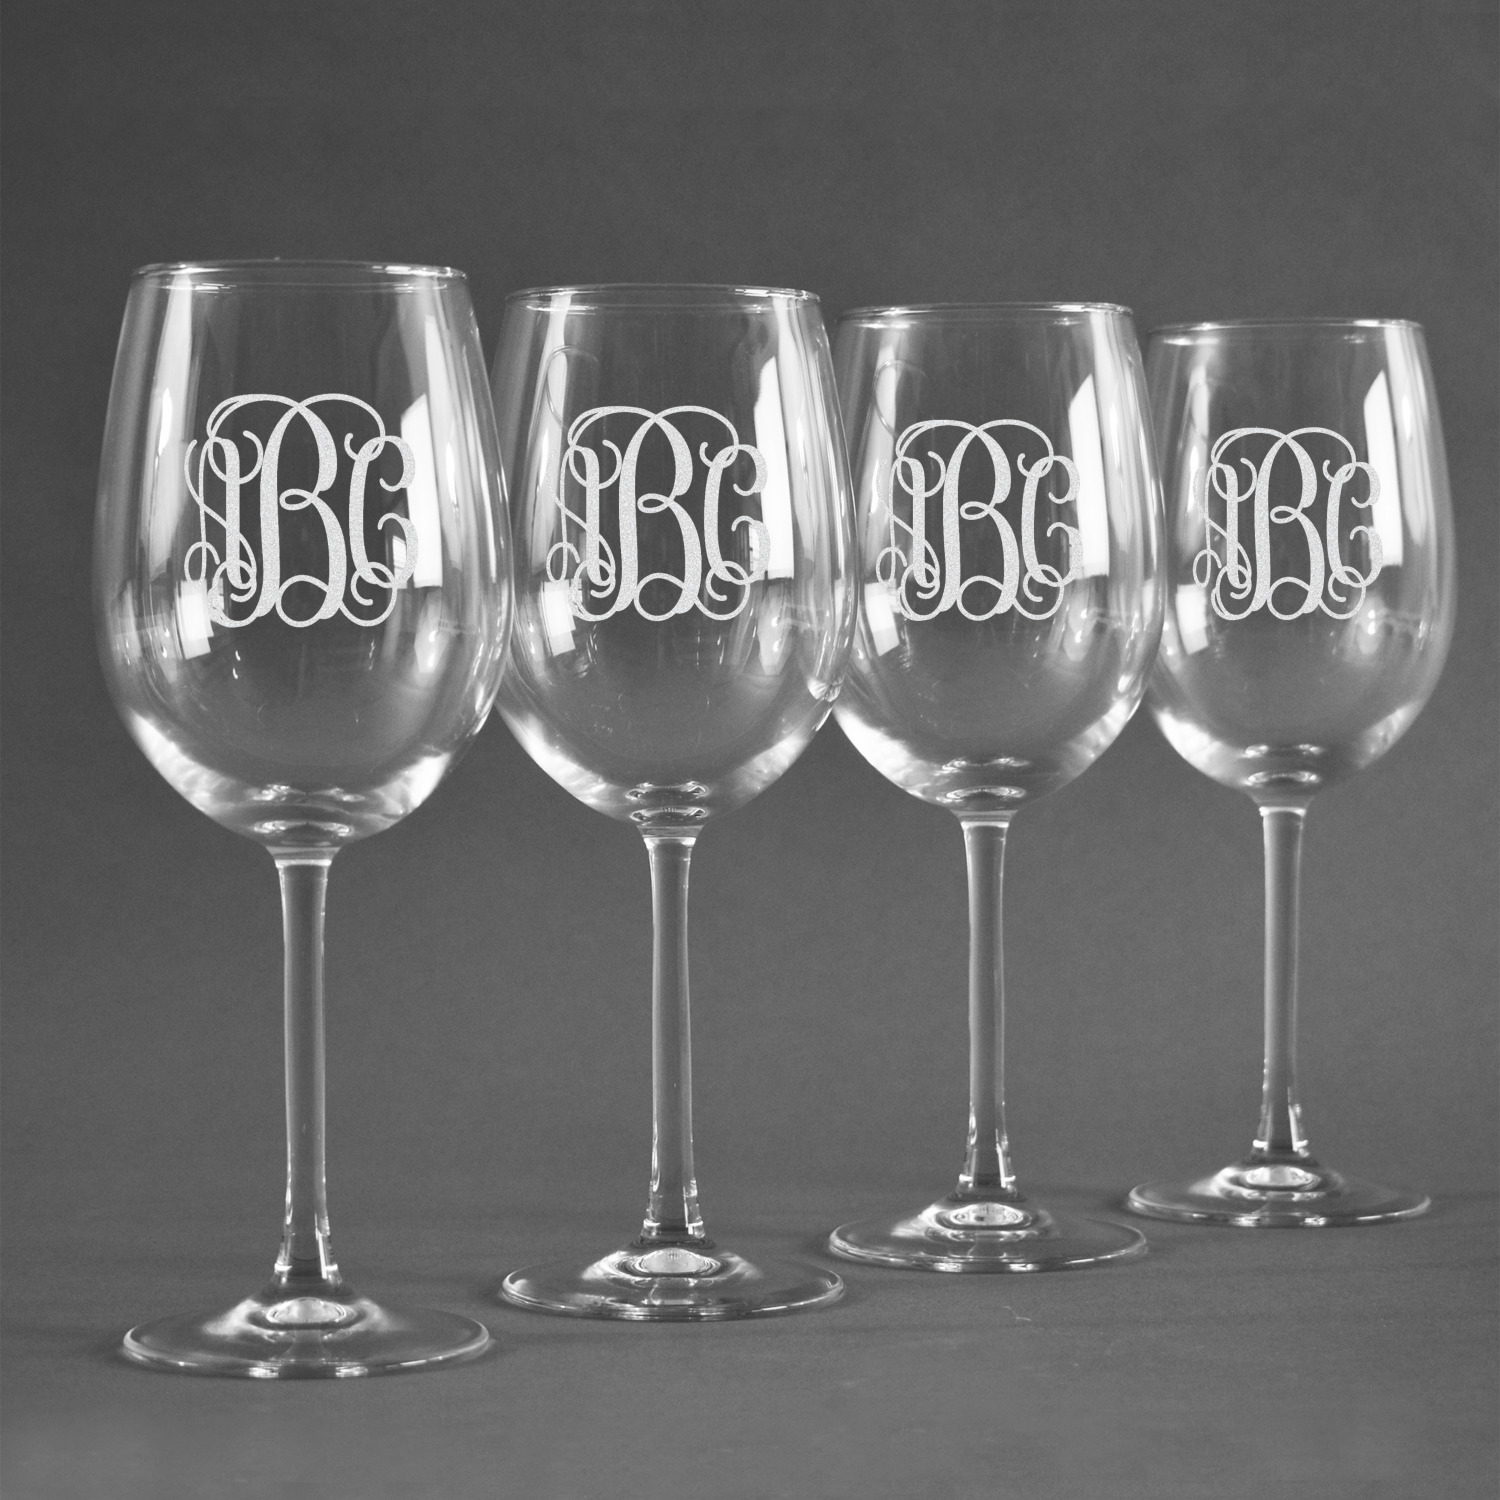 https://www.youcustomizeit.com/common/MAKE/298910/Monogram-Personalized-Wine-Glasses-Set-of-4.jpg?lm=1682545920